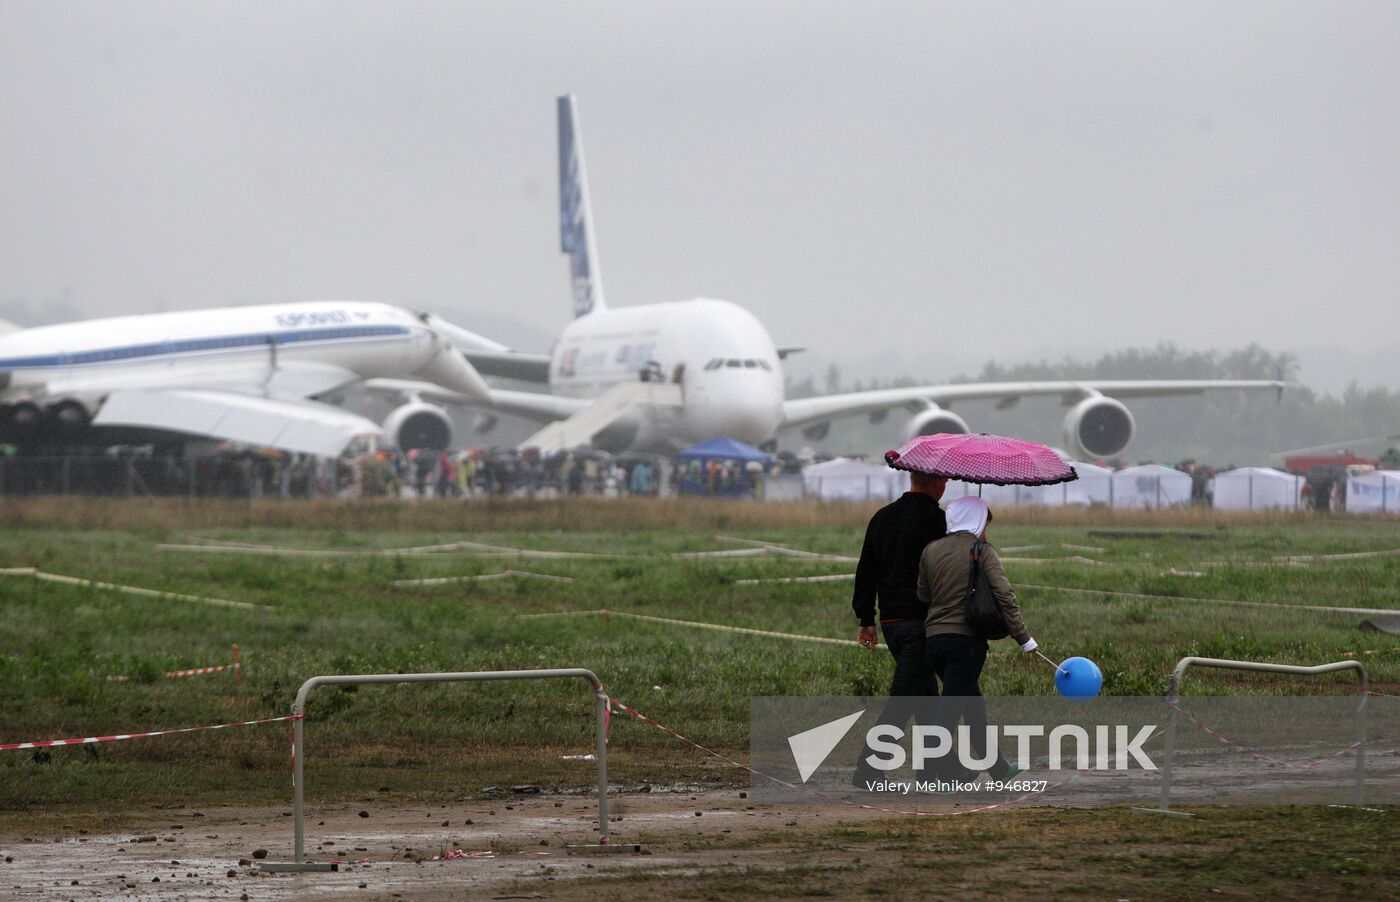 MAKS-2011 international air show closes in Zhukovsky